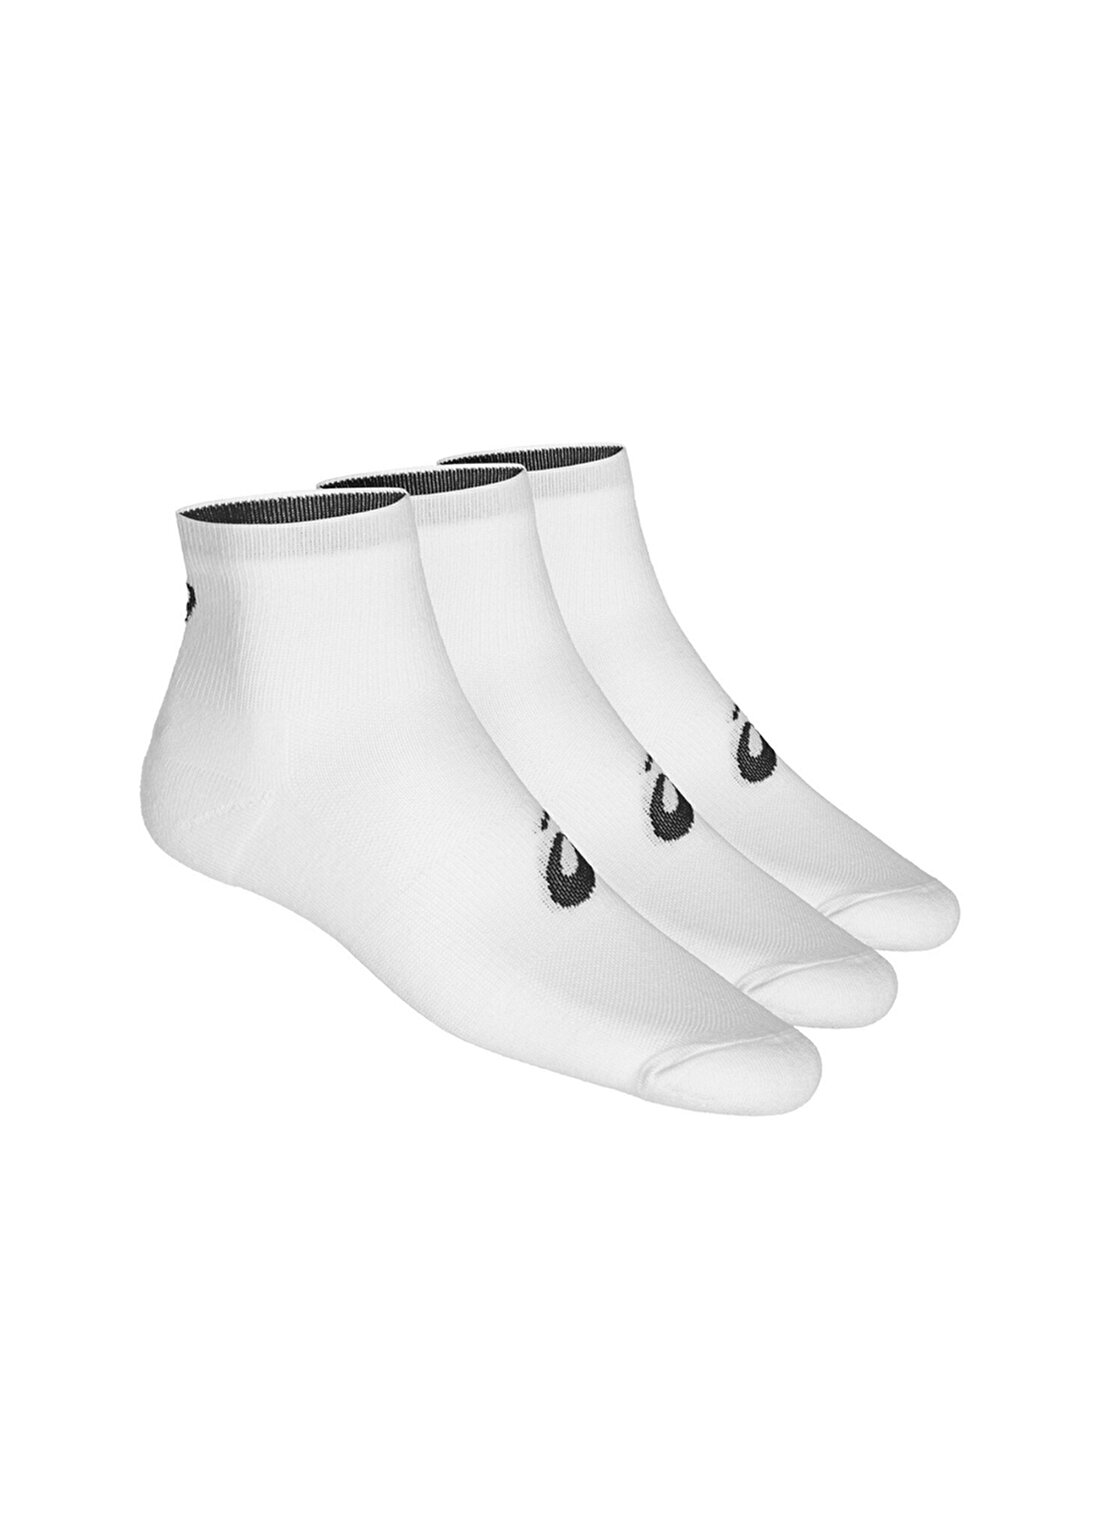 Asics Beyaz Unisex Çorap 155205-0001 3PPK QUARTER